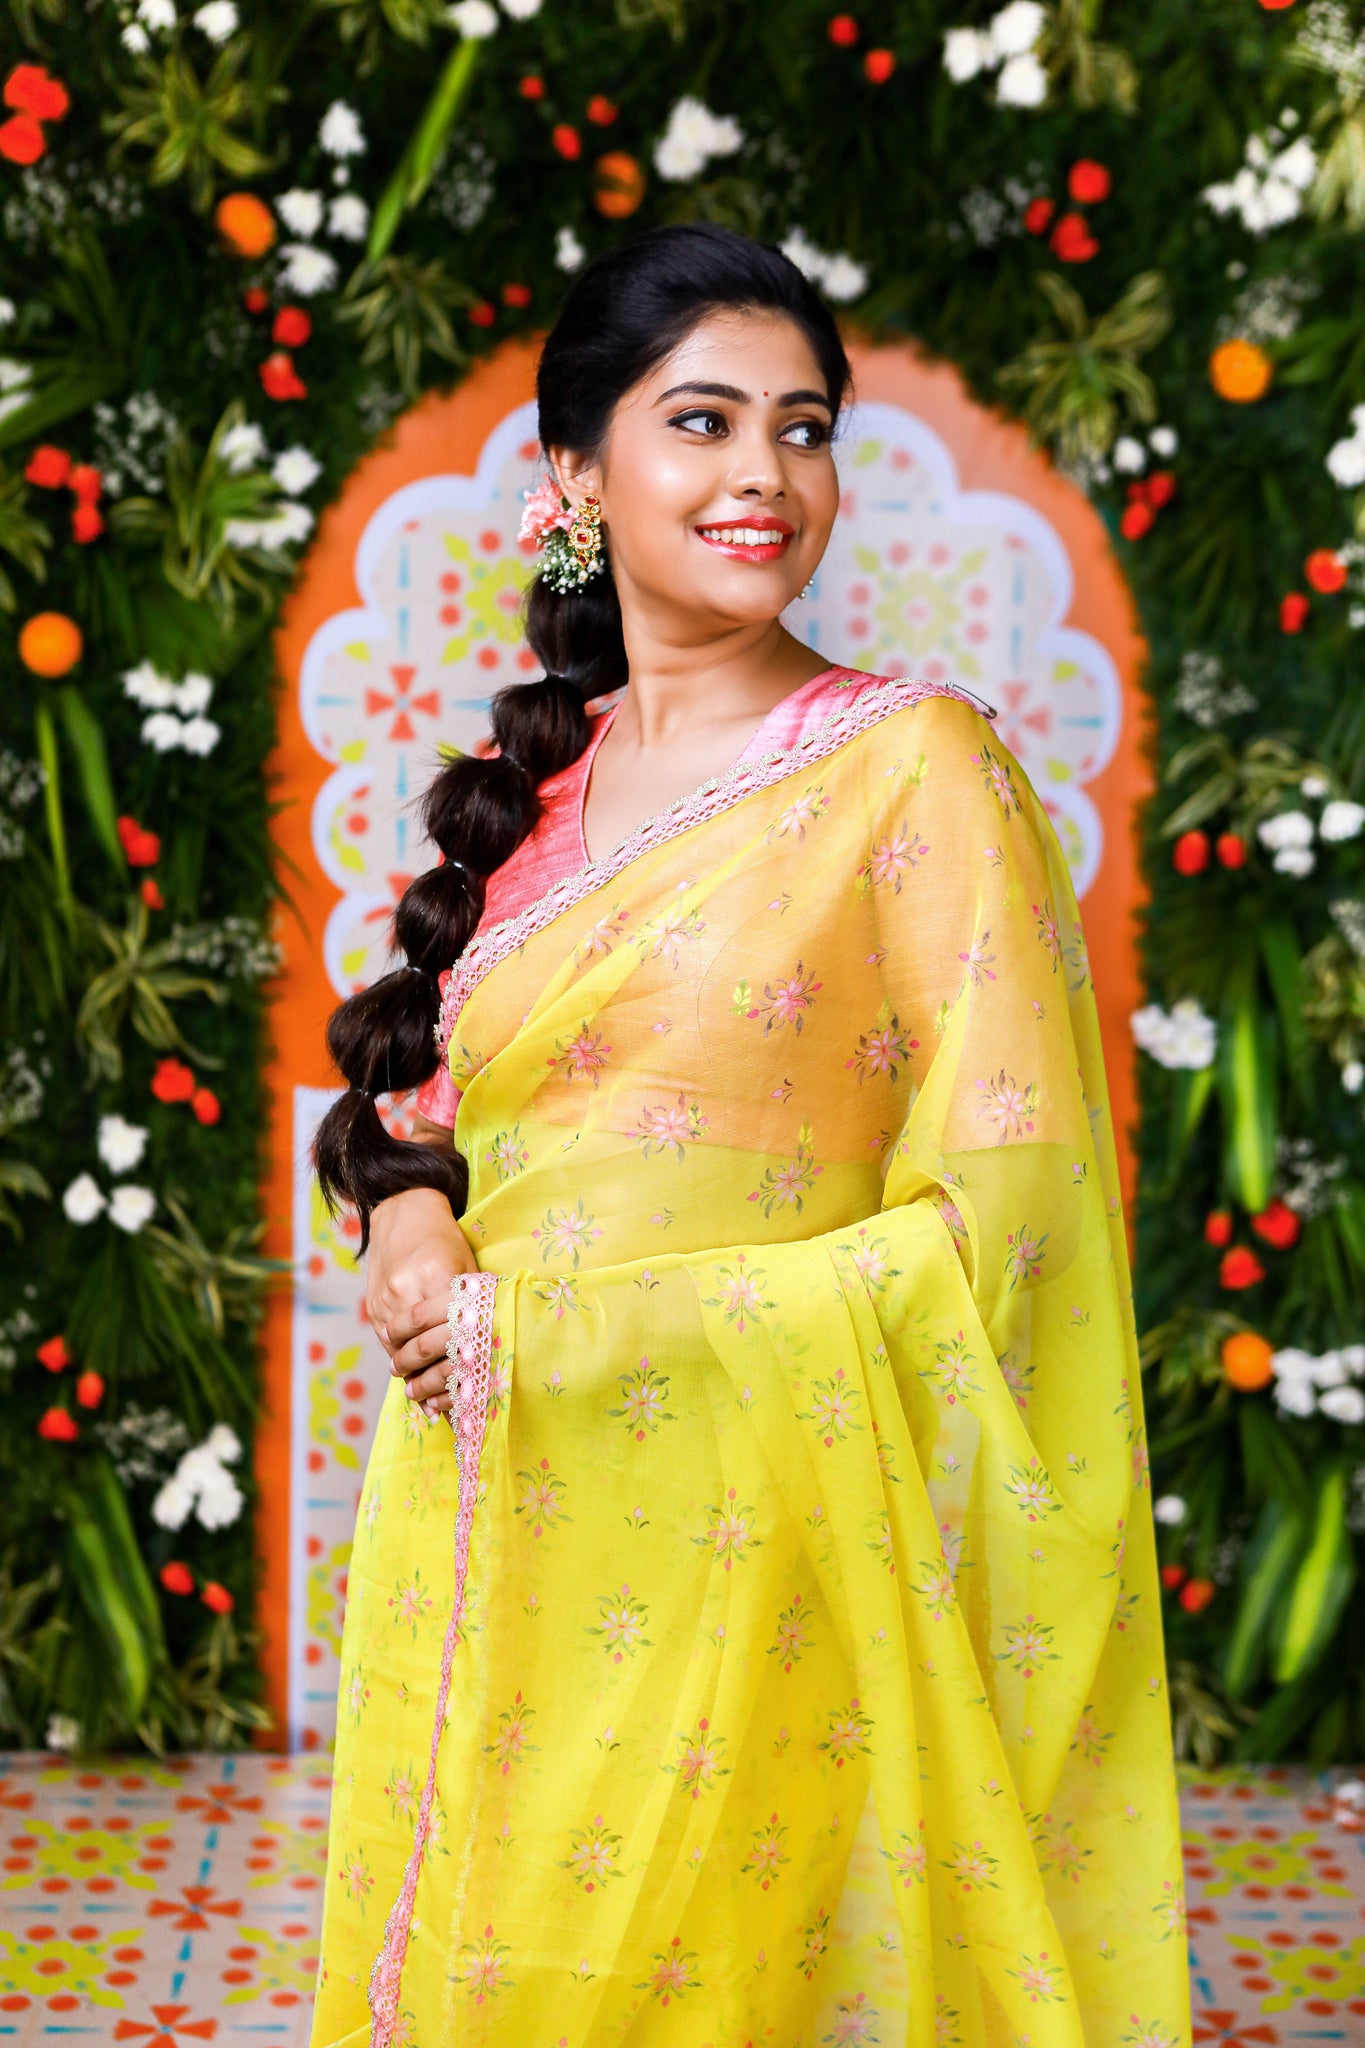 Madhumitha Siva Balaji looks gorgeous in a yellow Kanchipuram drape!